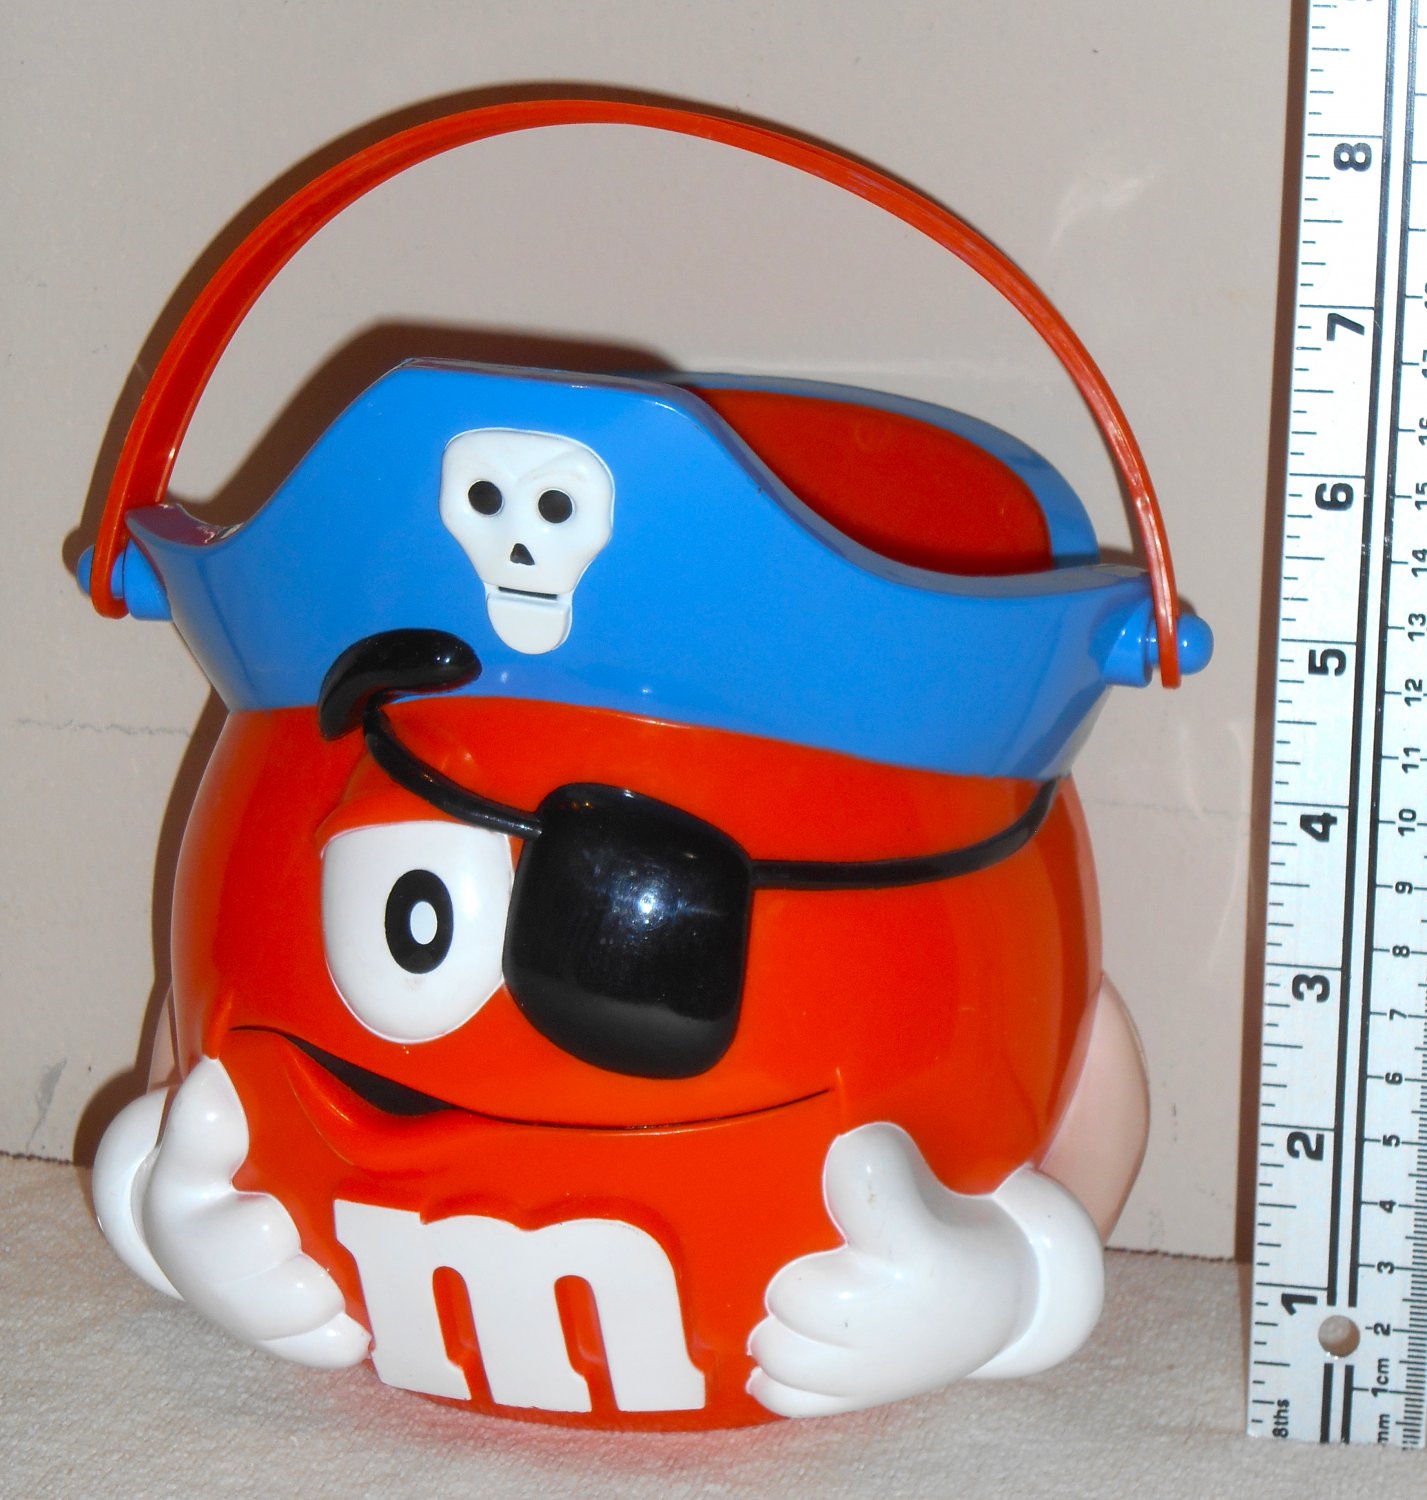 M&M's Orange Plastic Halloween Trick-Or-Treat Handled Bucket Pail Pirate Eye Patch 1999